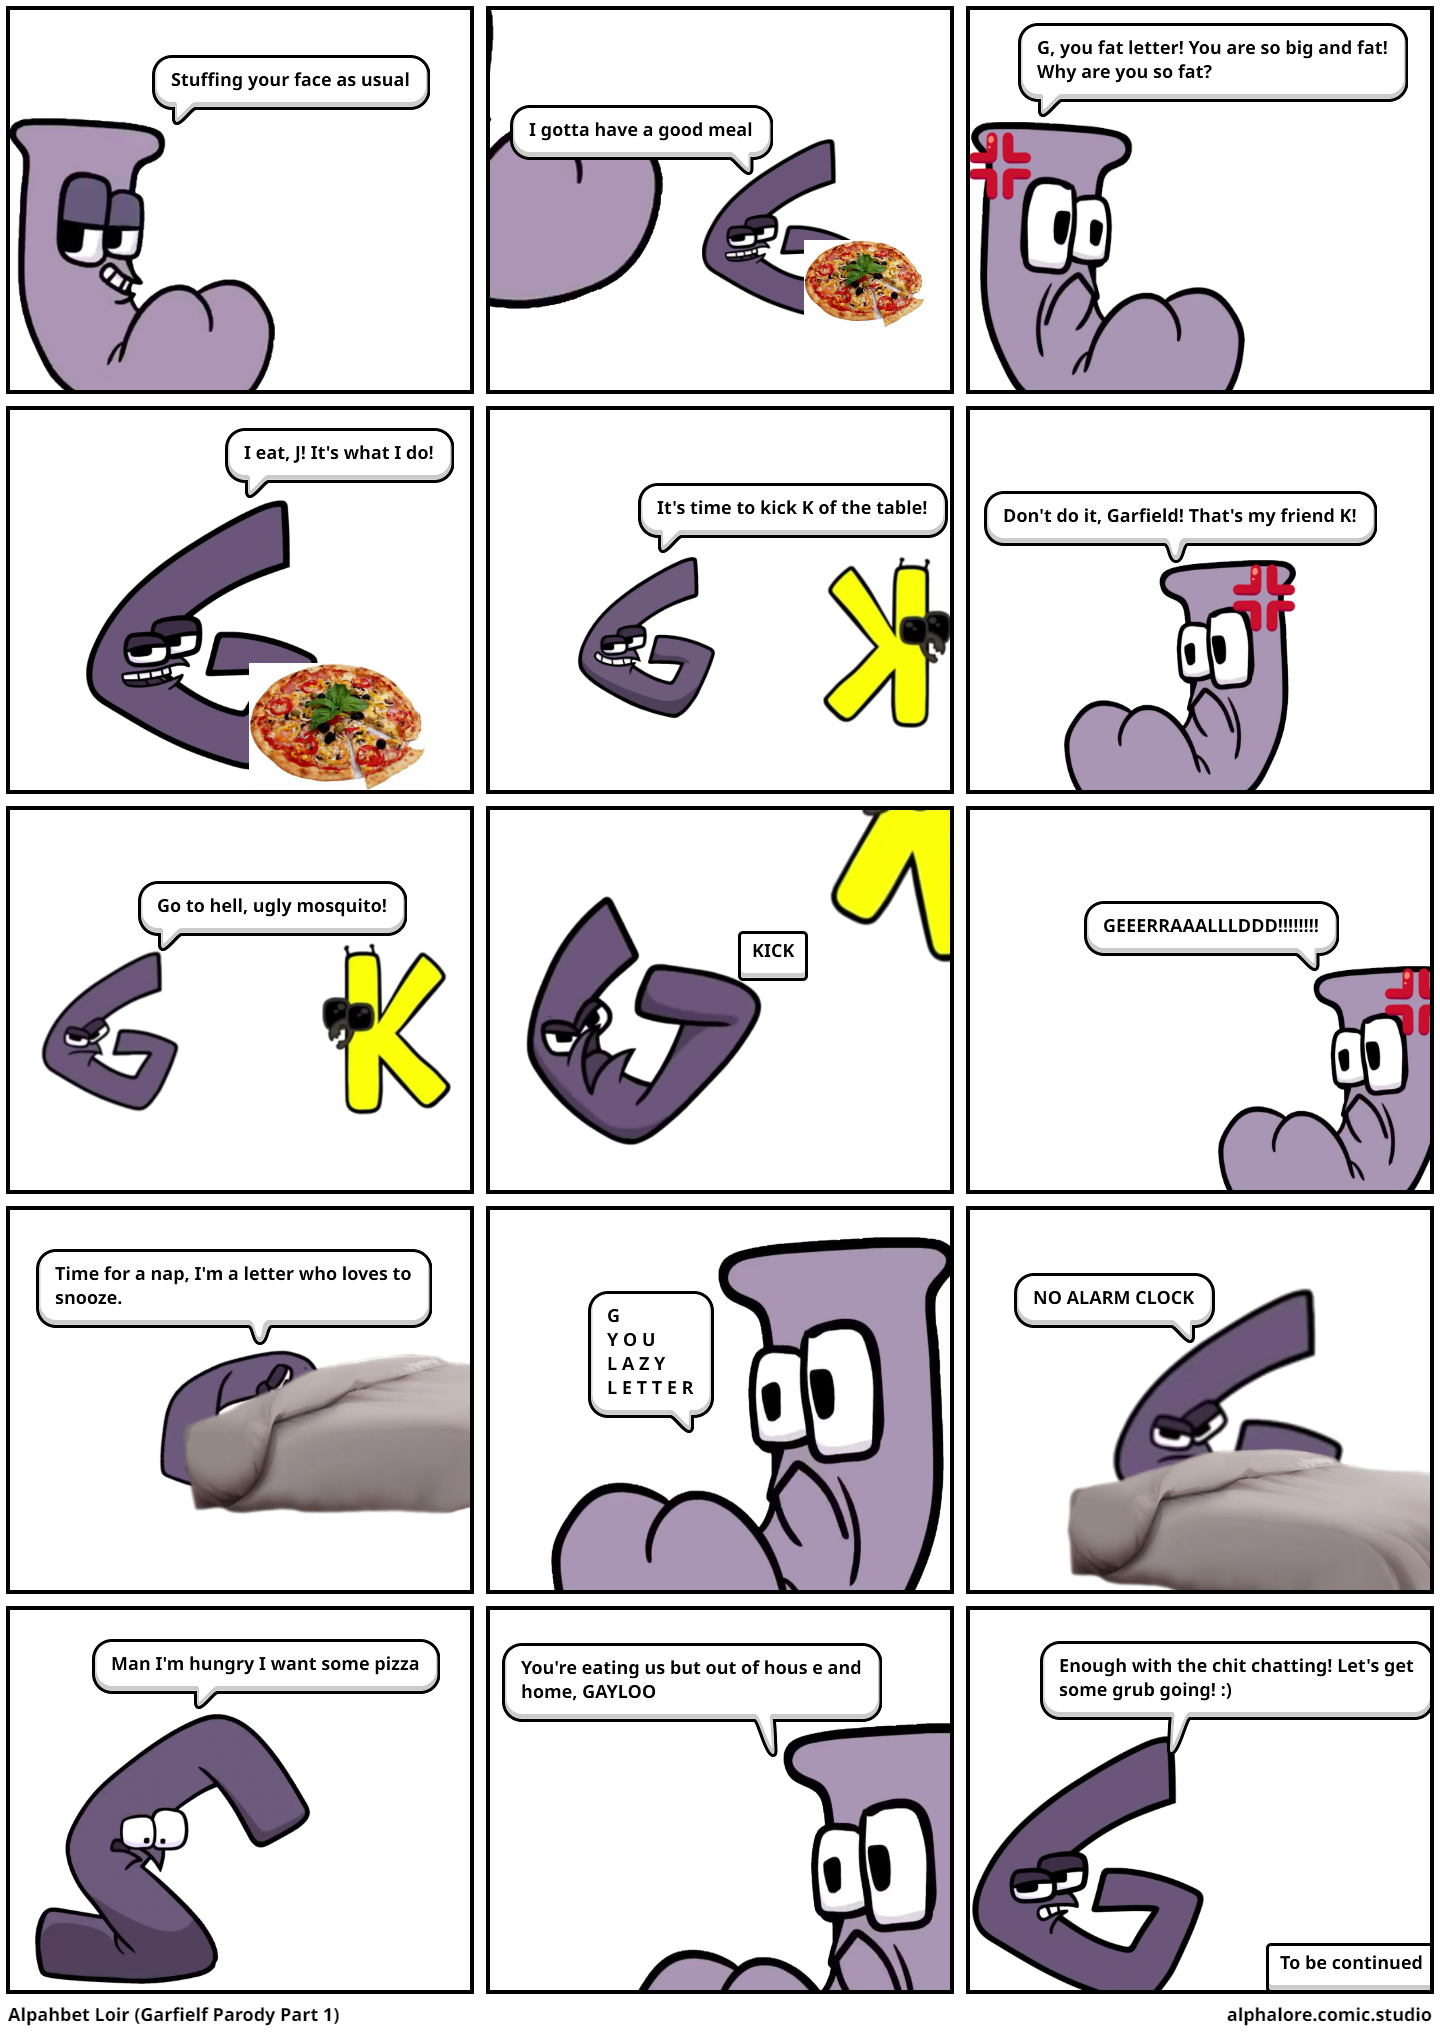 Spanish alphabet lore Comic Studio - make comics & memes with Spanish  alphabet lore characters